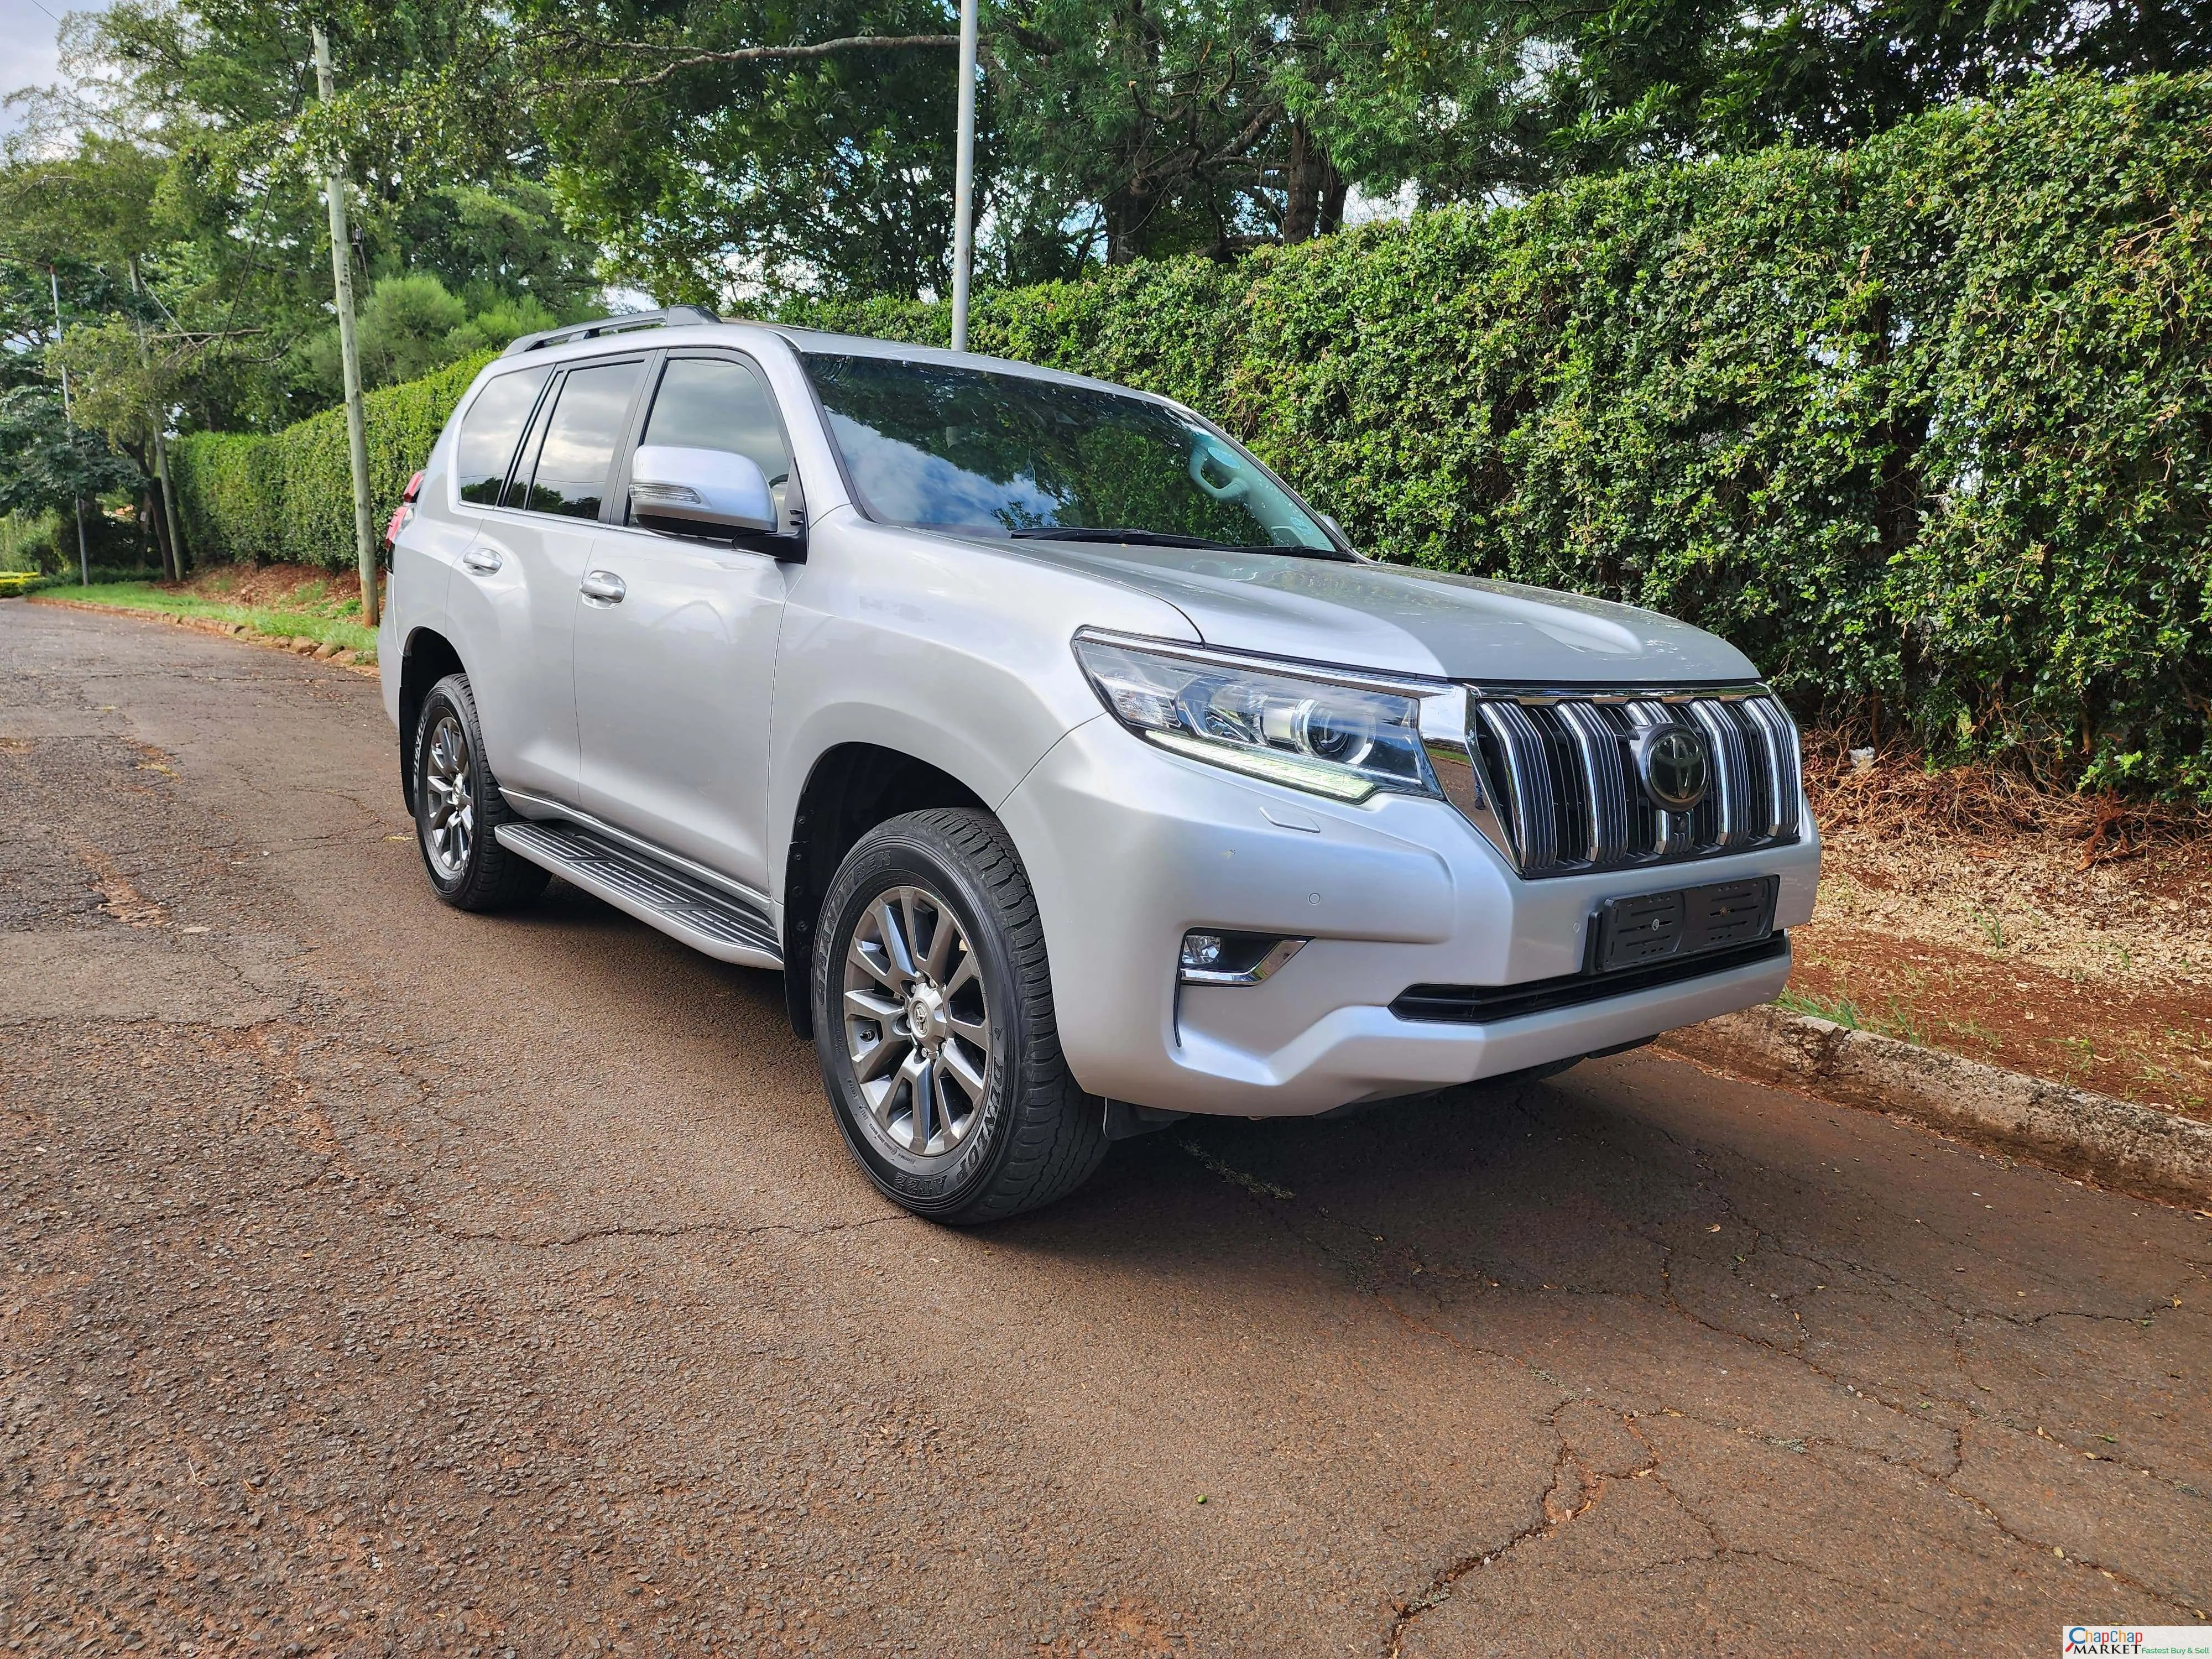 Toyota Prado VXL 2018 QUICKEST SALE 🔥 You Pay 20% Deposit Trade in OK EXCLUSIVE Toyota Prado KAKADU for sale in kenya hire purchase installments DIESEL SUNROOF LEATHER